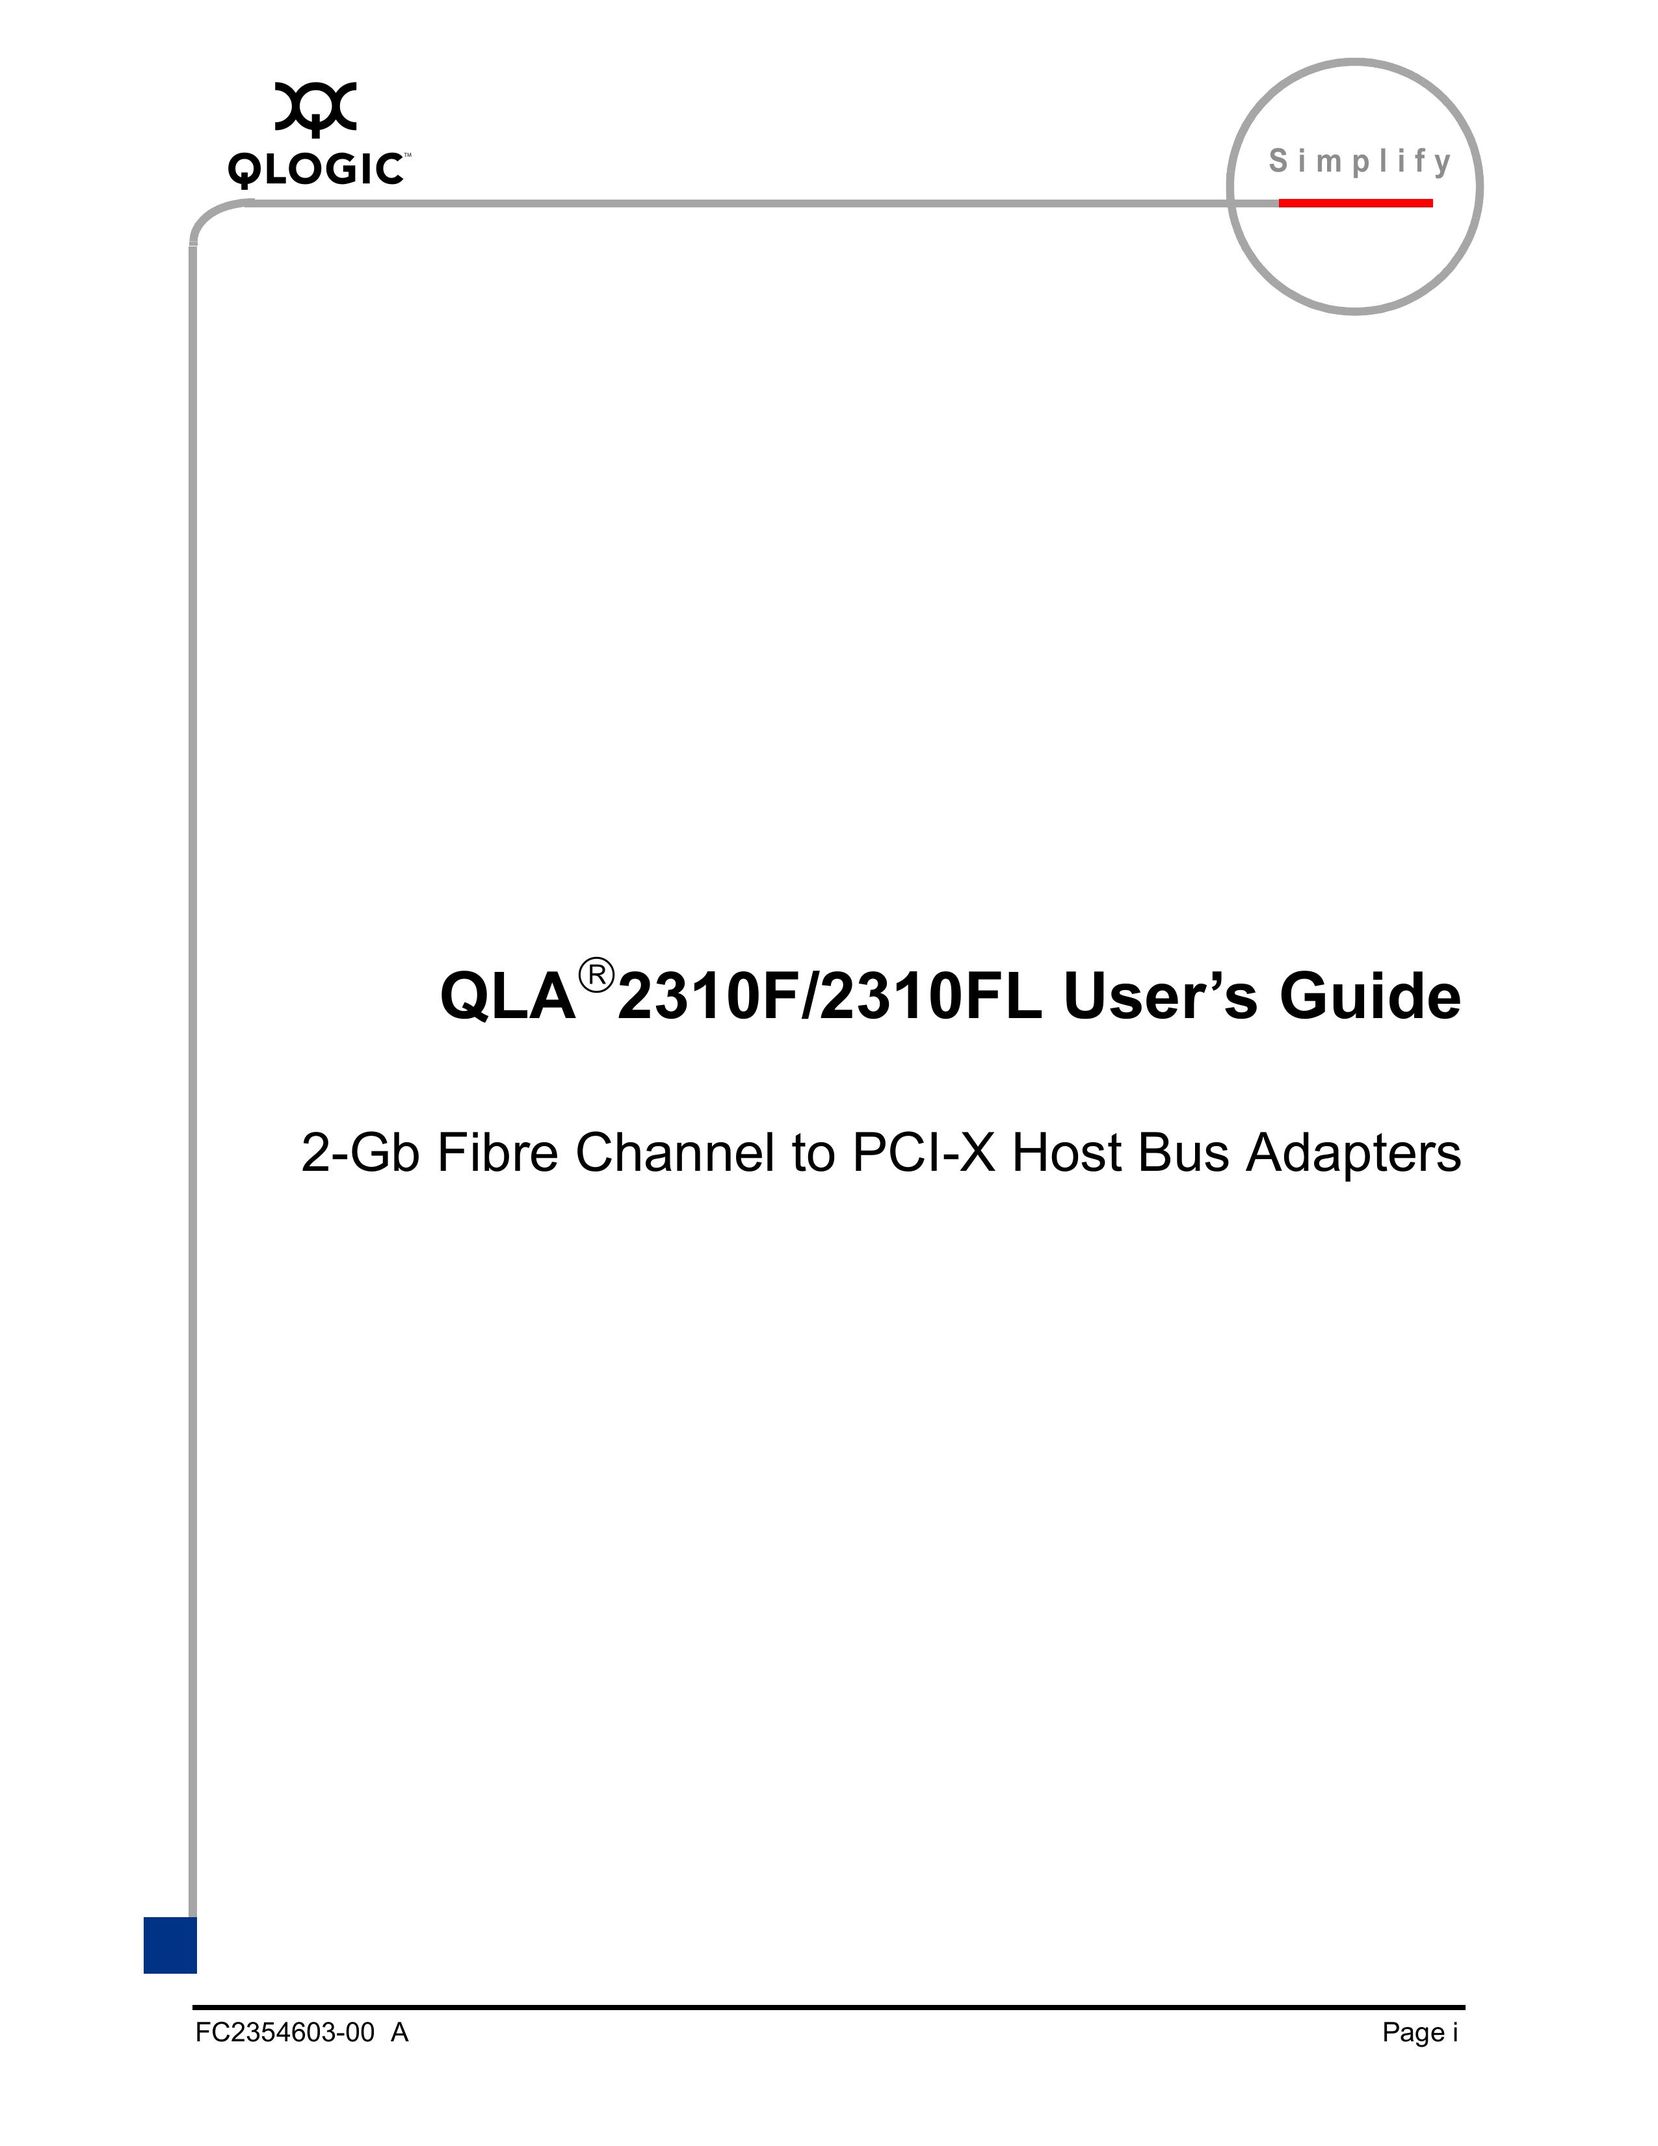 Q-Logic 2310F Network Card User Manual